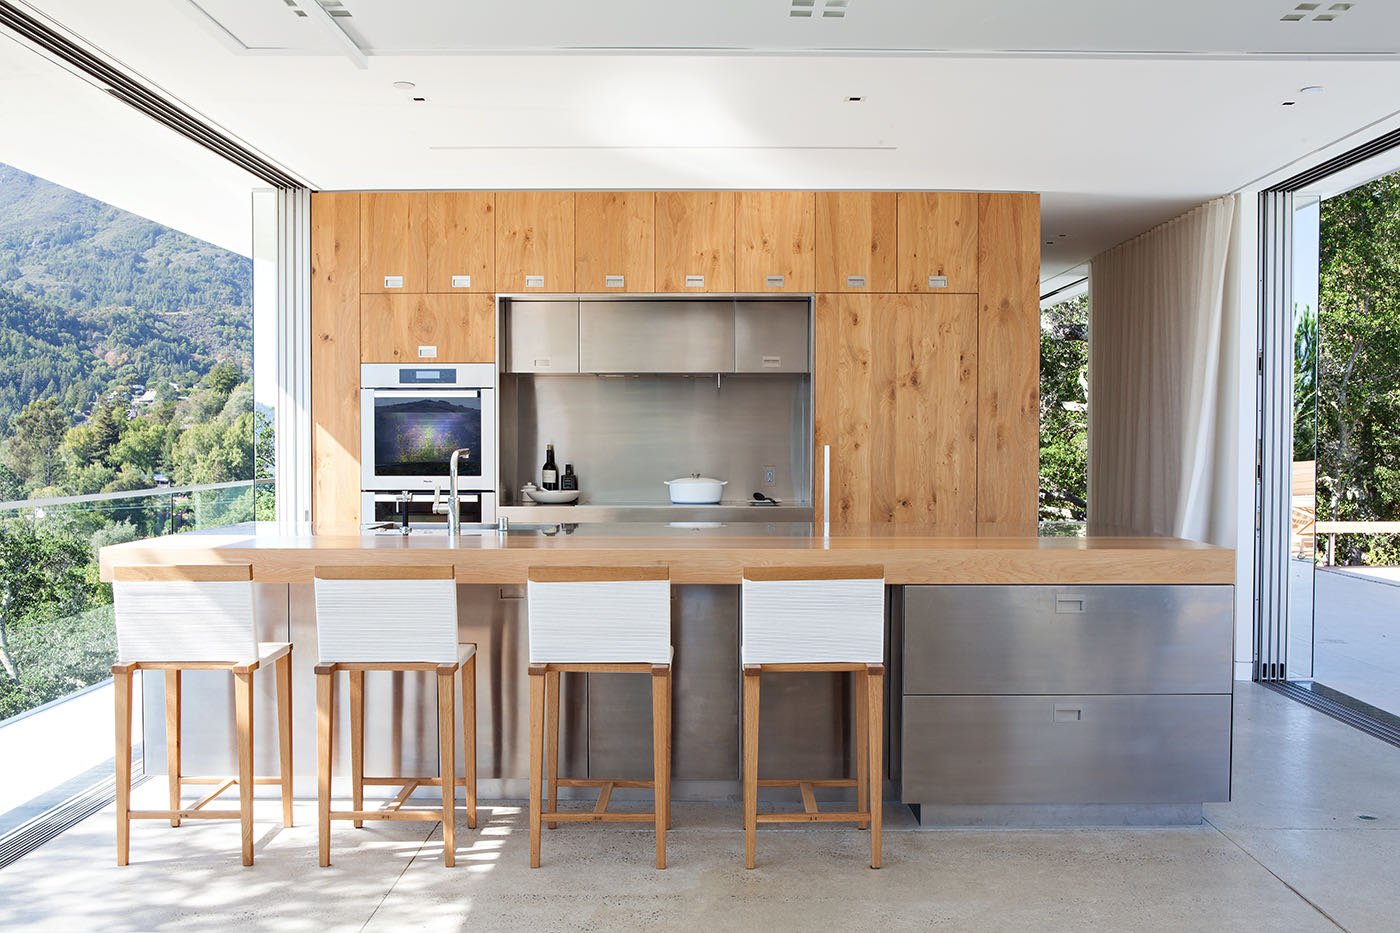 turner residence - jensen architects - kitchen